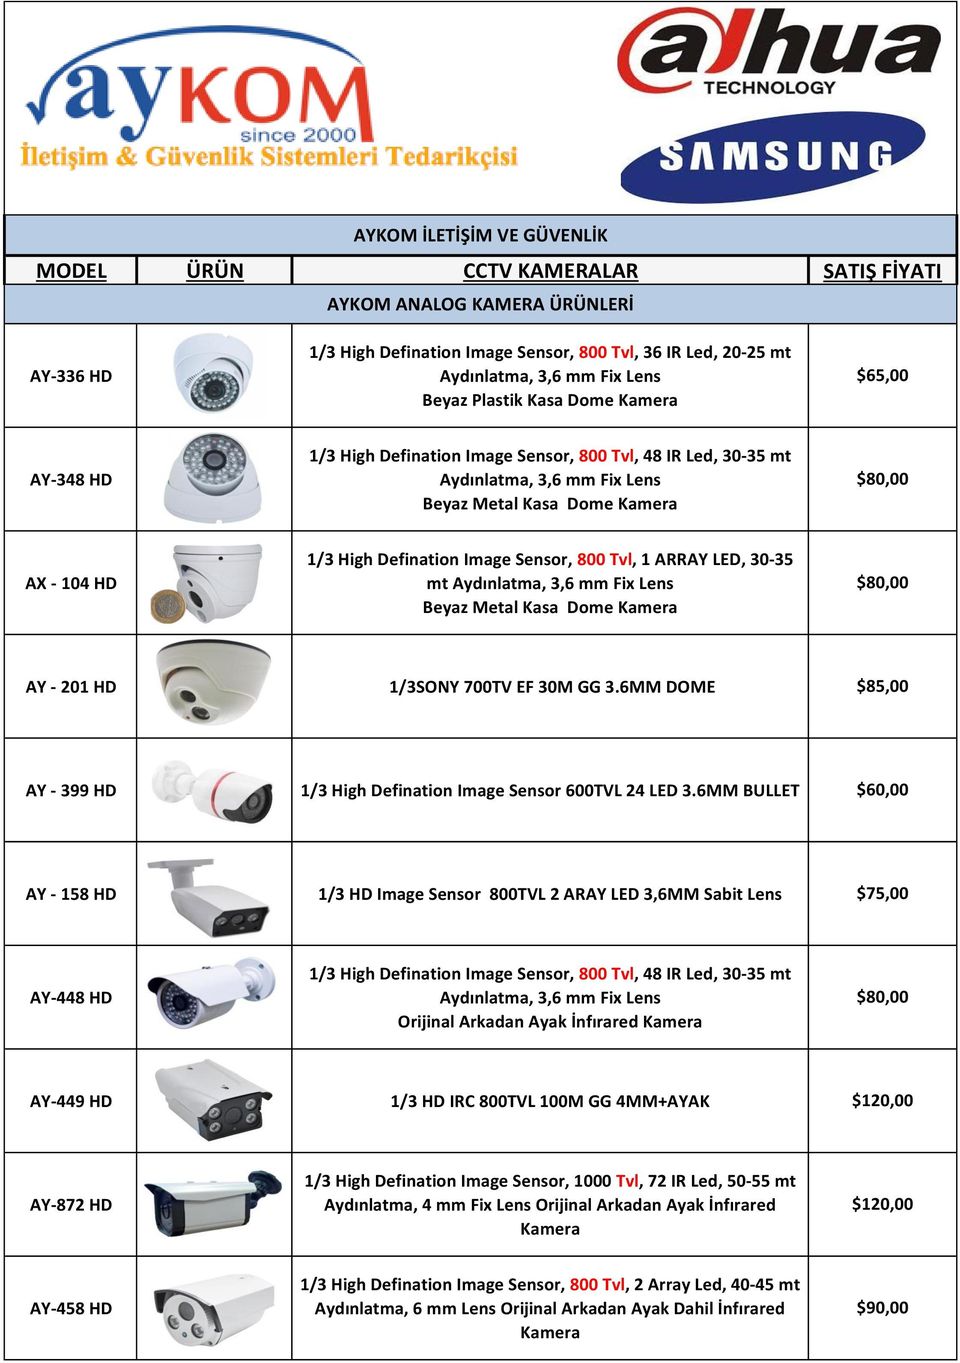 Defination Image Sensor, 800 Tvl, 1 ARRAY LED, 30-35 mt Aydınlatma, 3,6 mm Fix Lens Beyaz Metal Kasa Dome Kamera $80,00 AY - 201 HD 1/3SONY 700TV EF 30M GG 3.